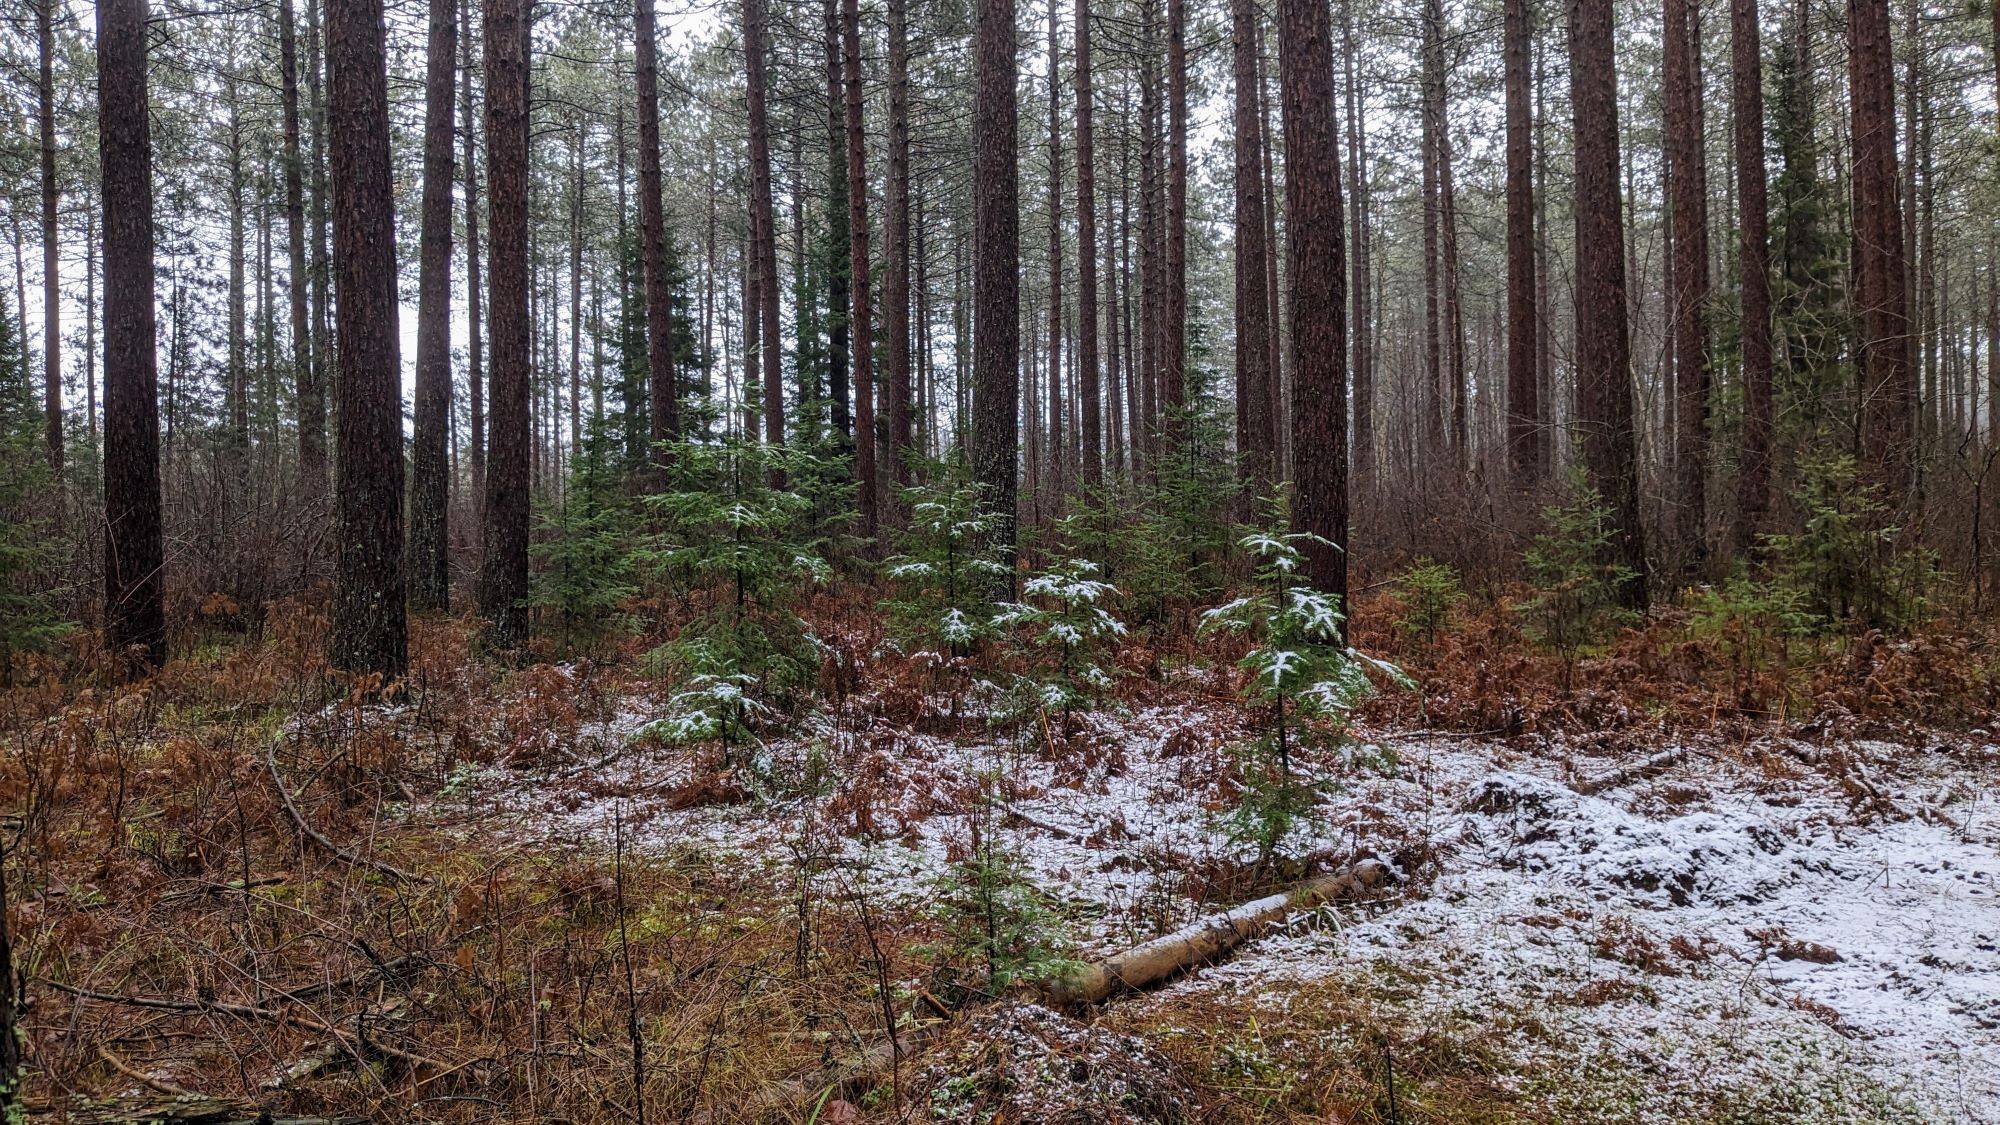 snowy ground within pine forest